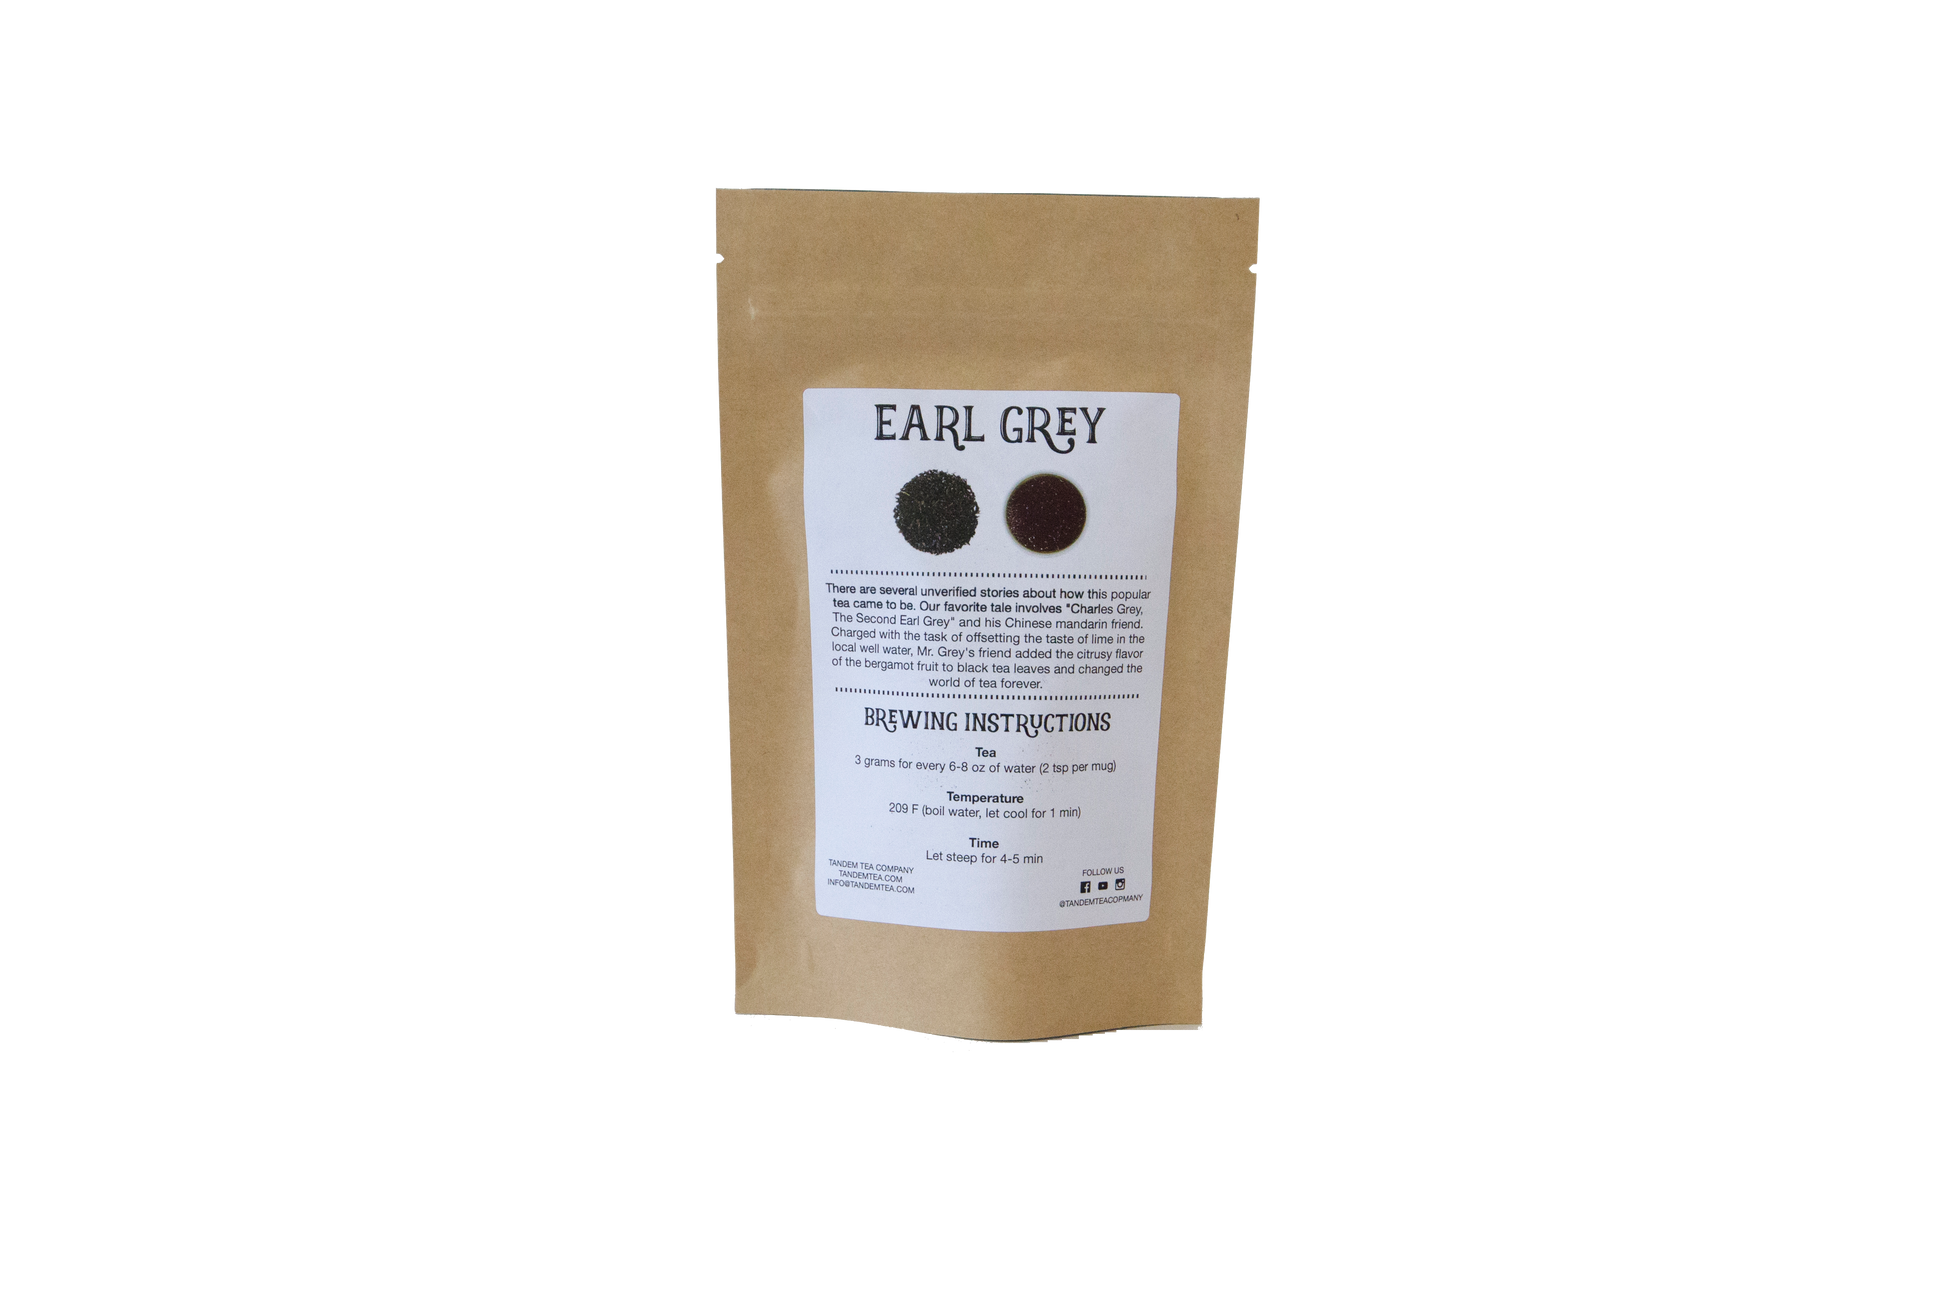 Earl Grey - Organic Black Tea Tandem Tea Company Packaging